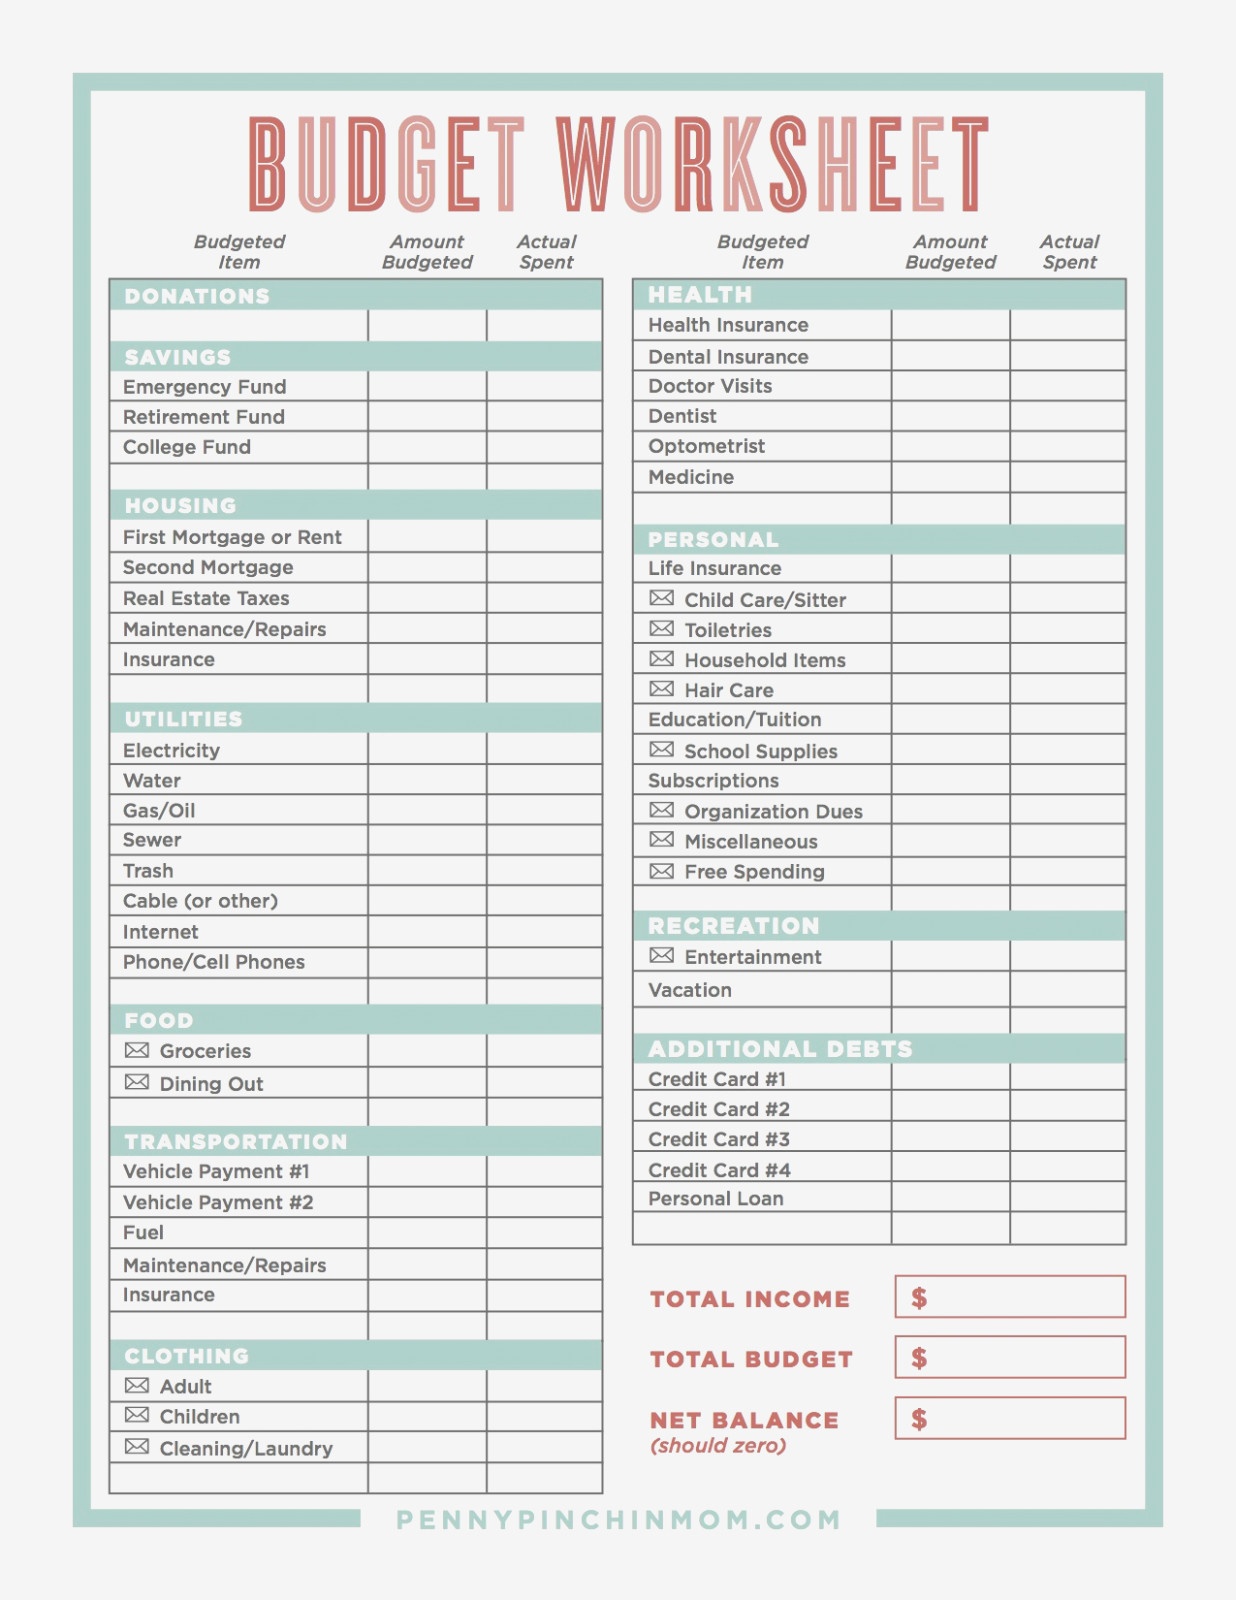 Free Printable Budget Worksheets Dave Ramsey Unique Bud Worksheet - Free Printable Budget Worksheets